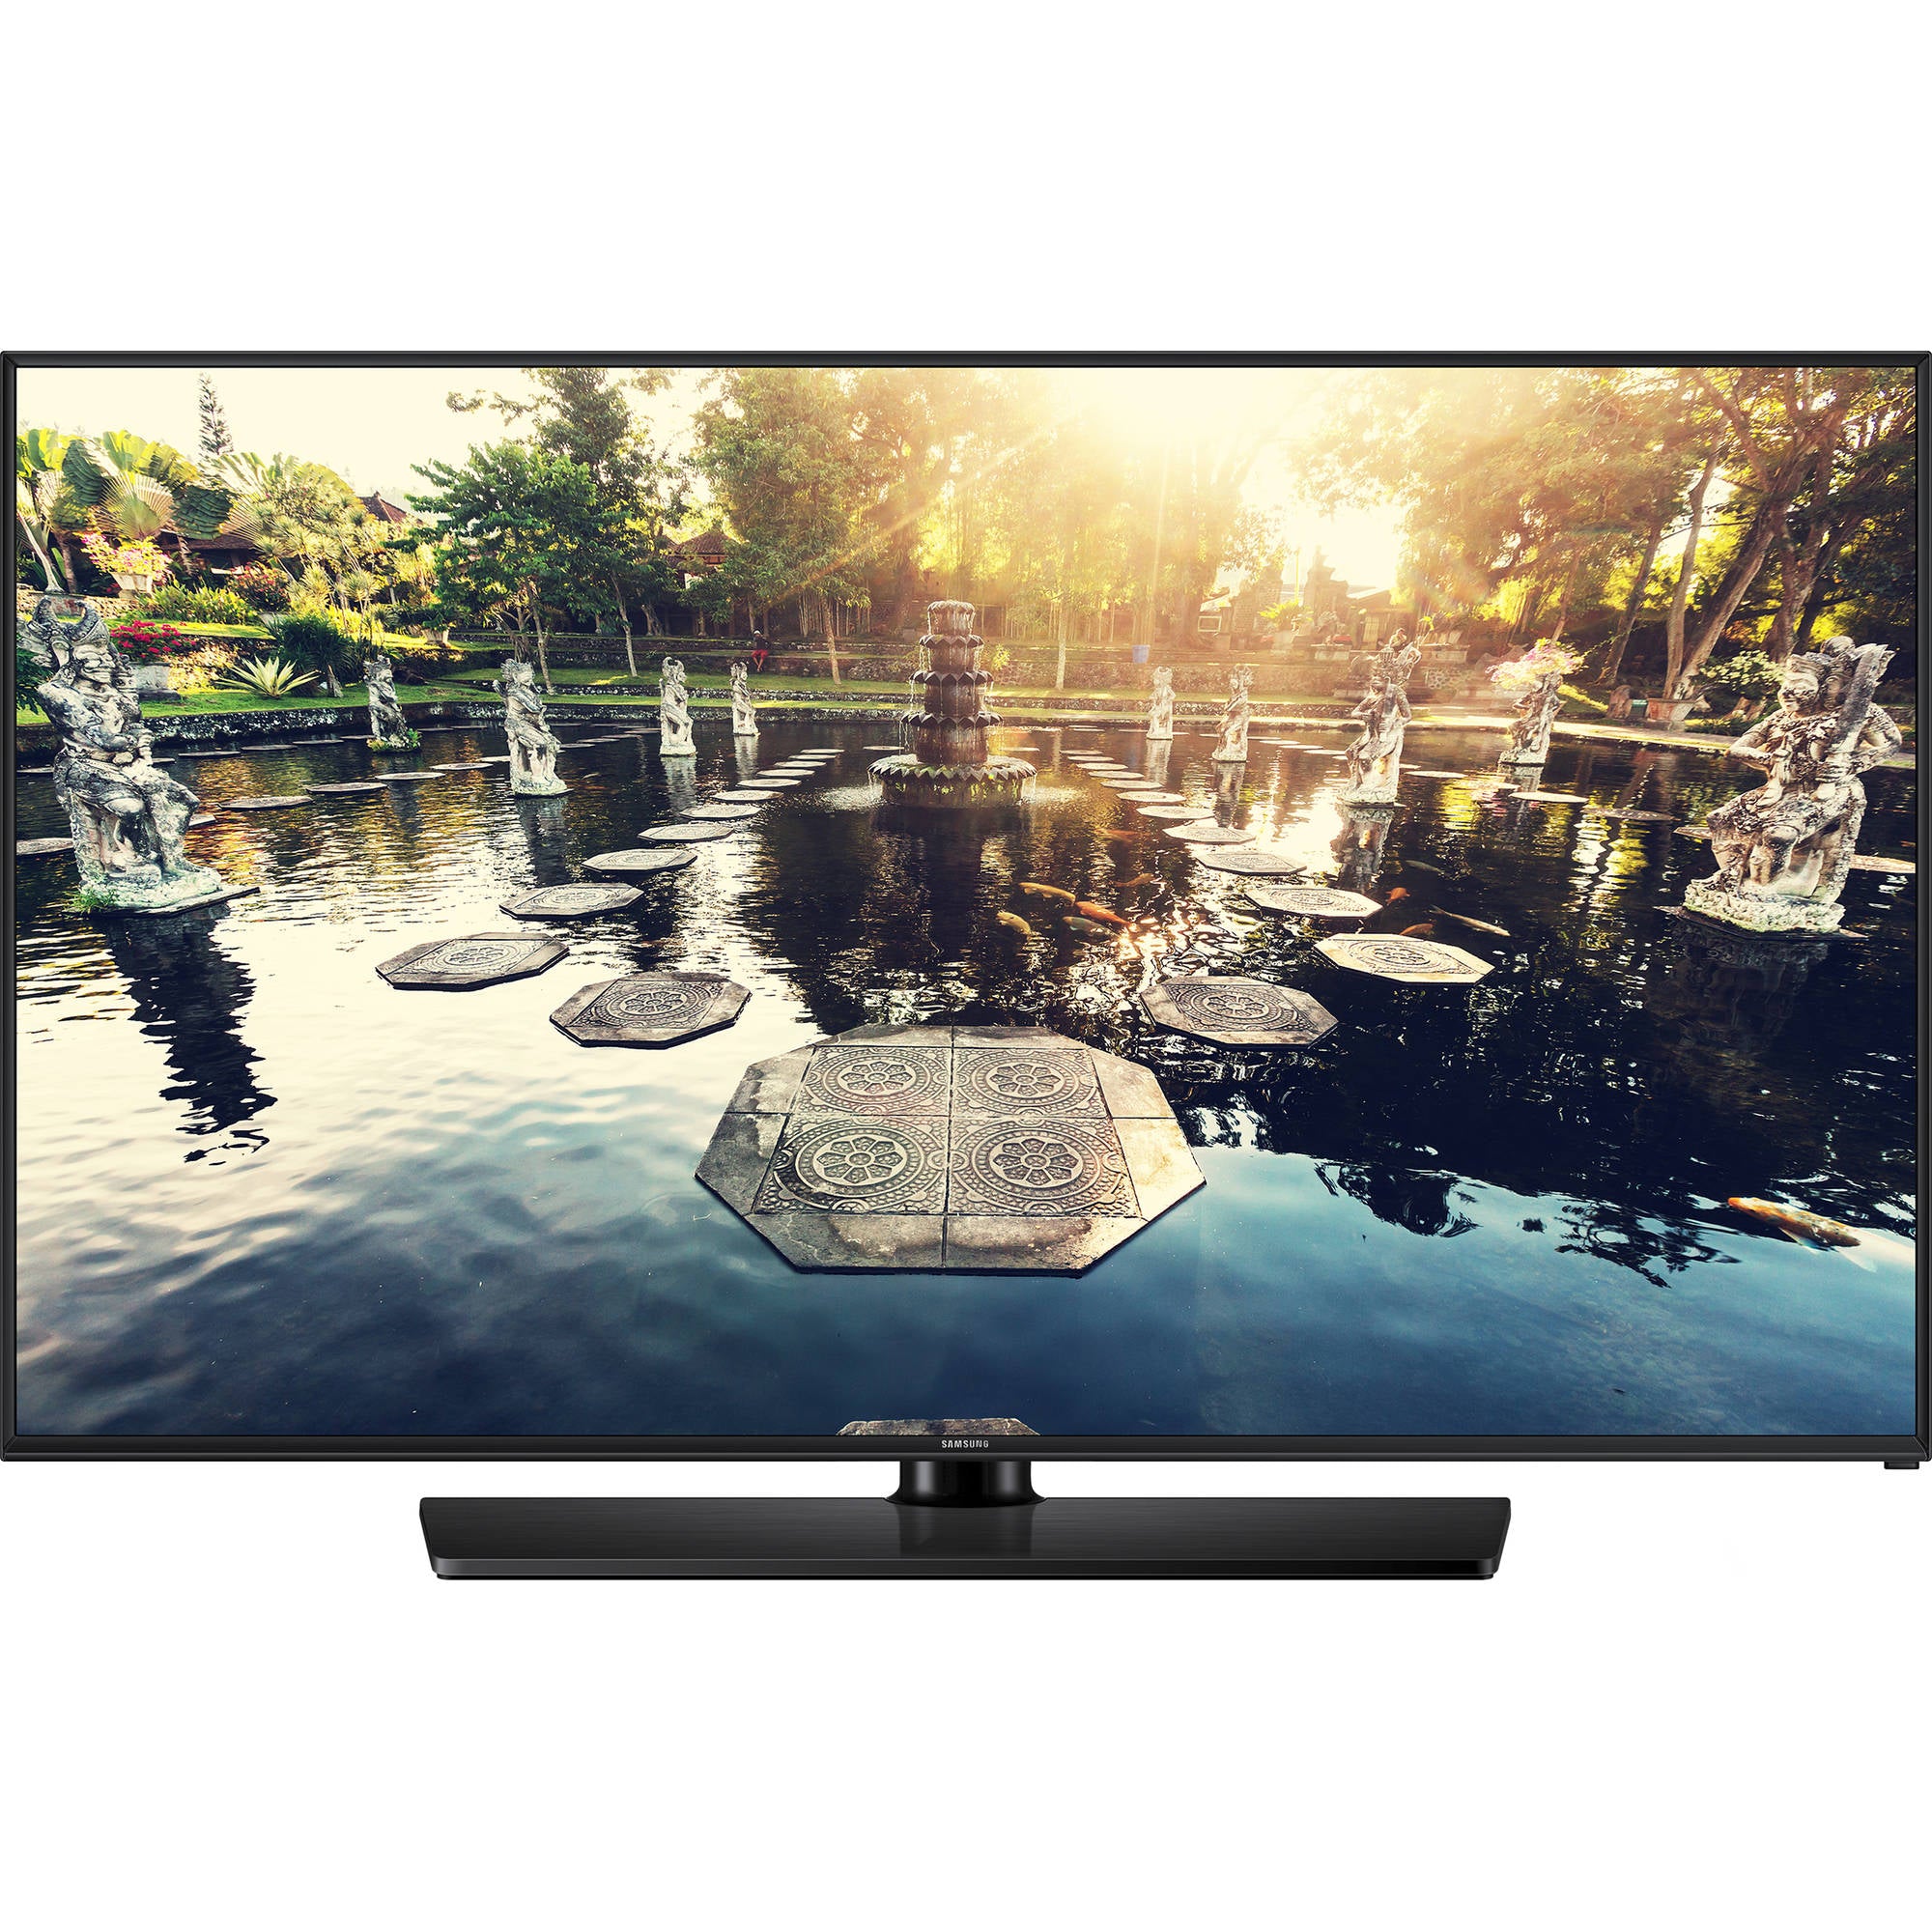 Samsung HG40NE690BFXZA 40" Full HD Slim Direct-Lit LED Hospitality Smart TV with Built-in Wi-Fi (Black) - Samsung Parts USA